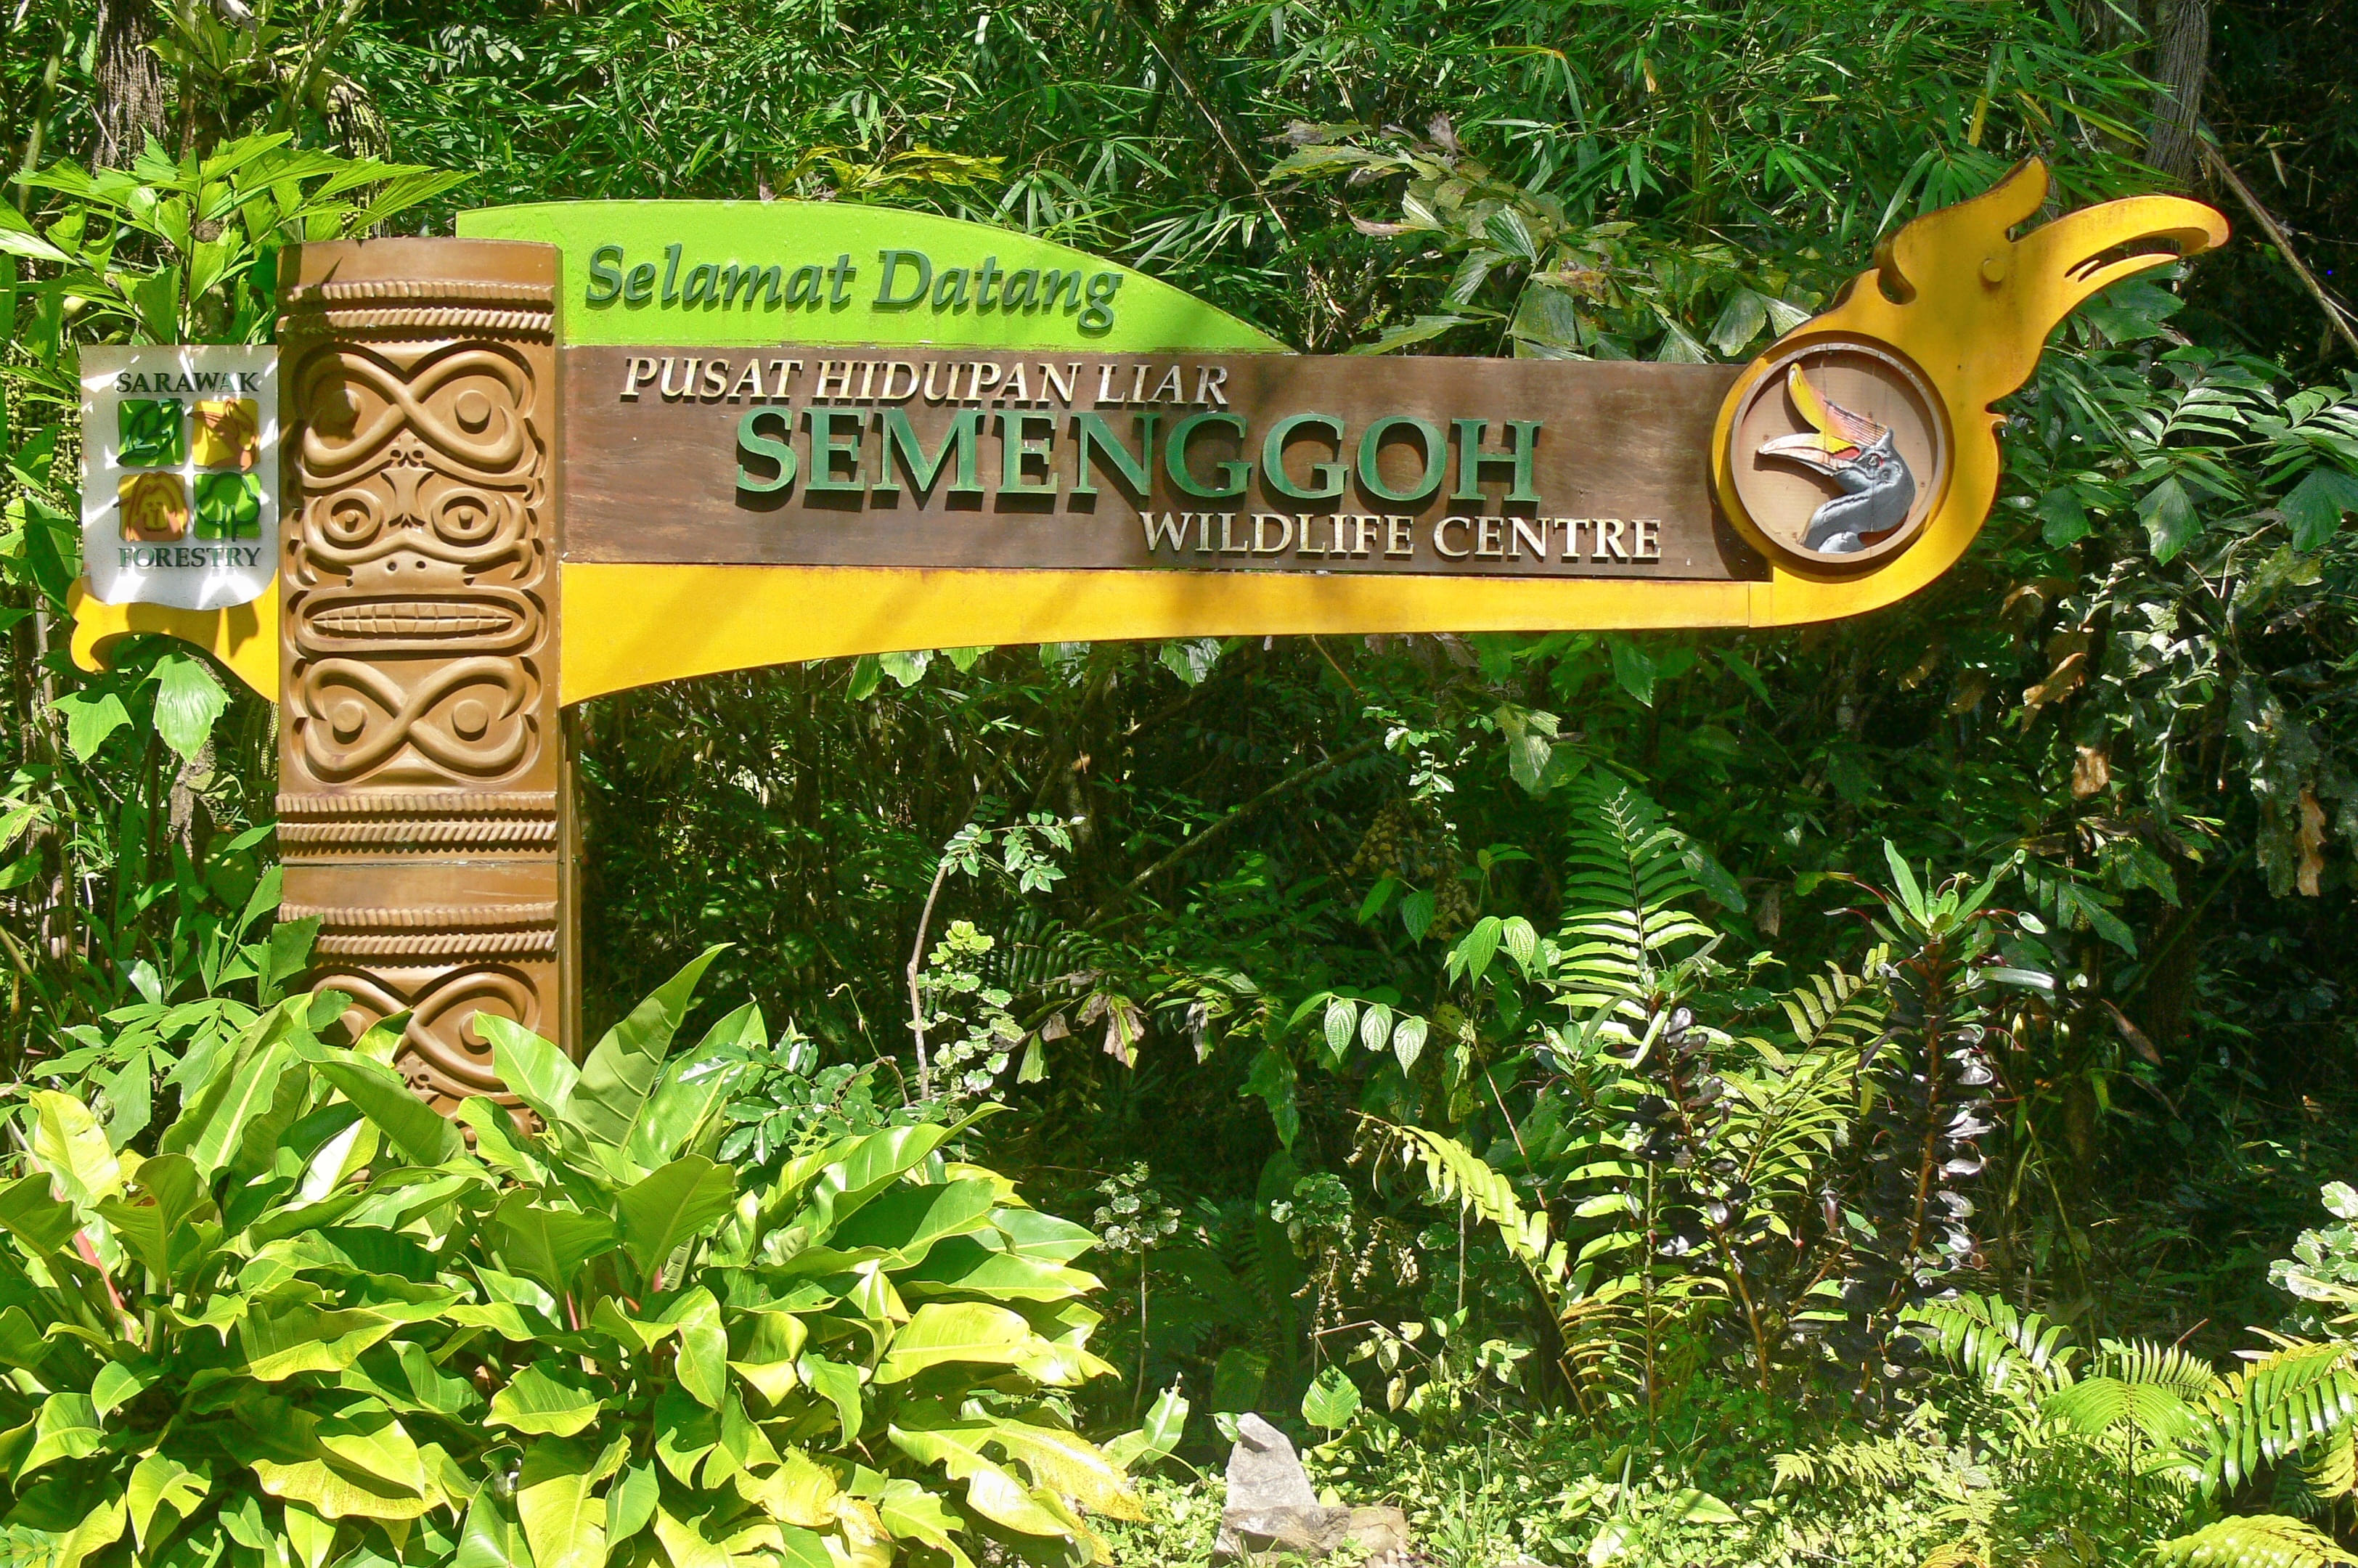 Semenggoh Wildlife Rehabilitation Centre